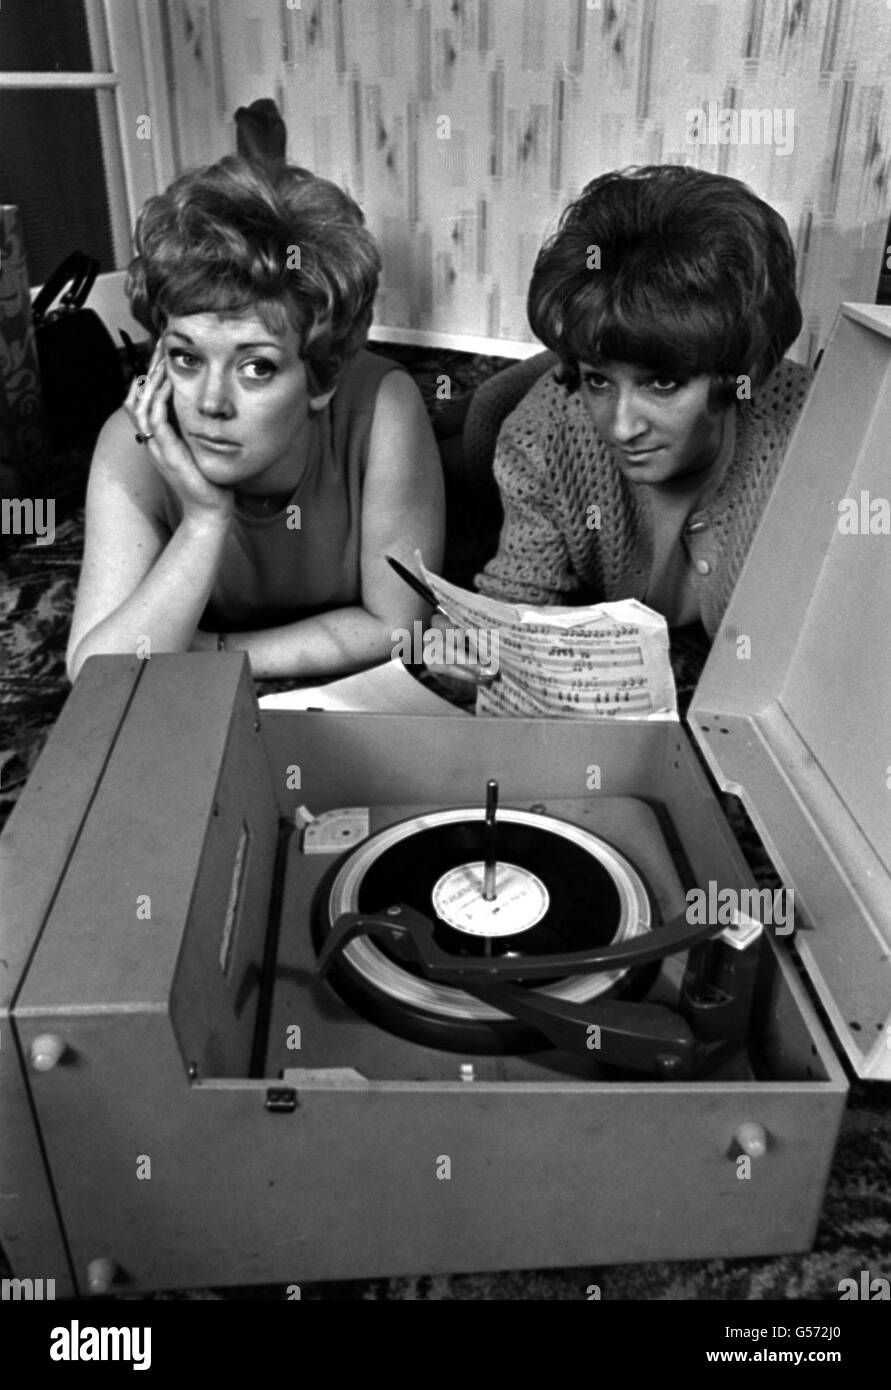 RECORD PLAYER : 1968 Stock Photo